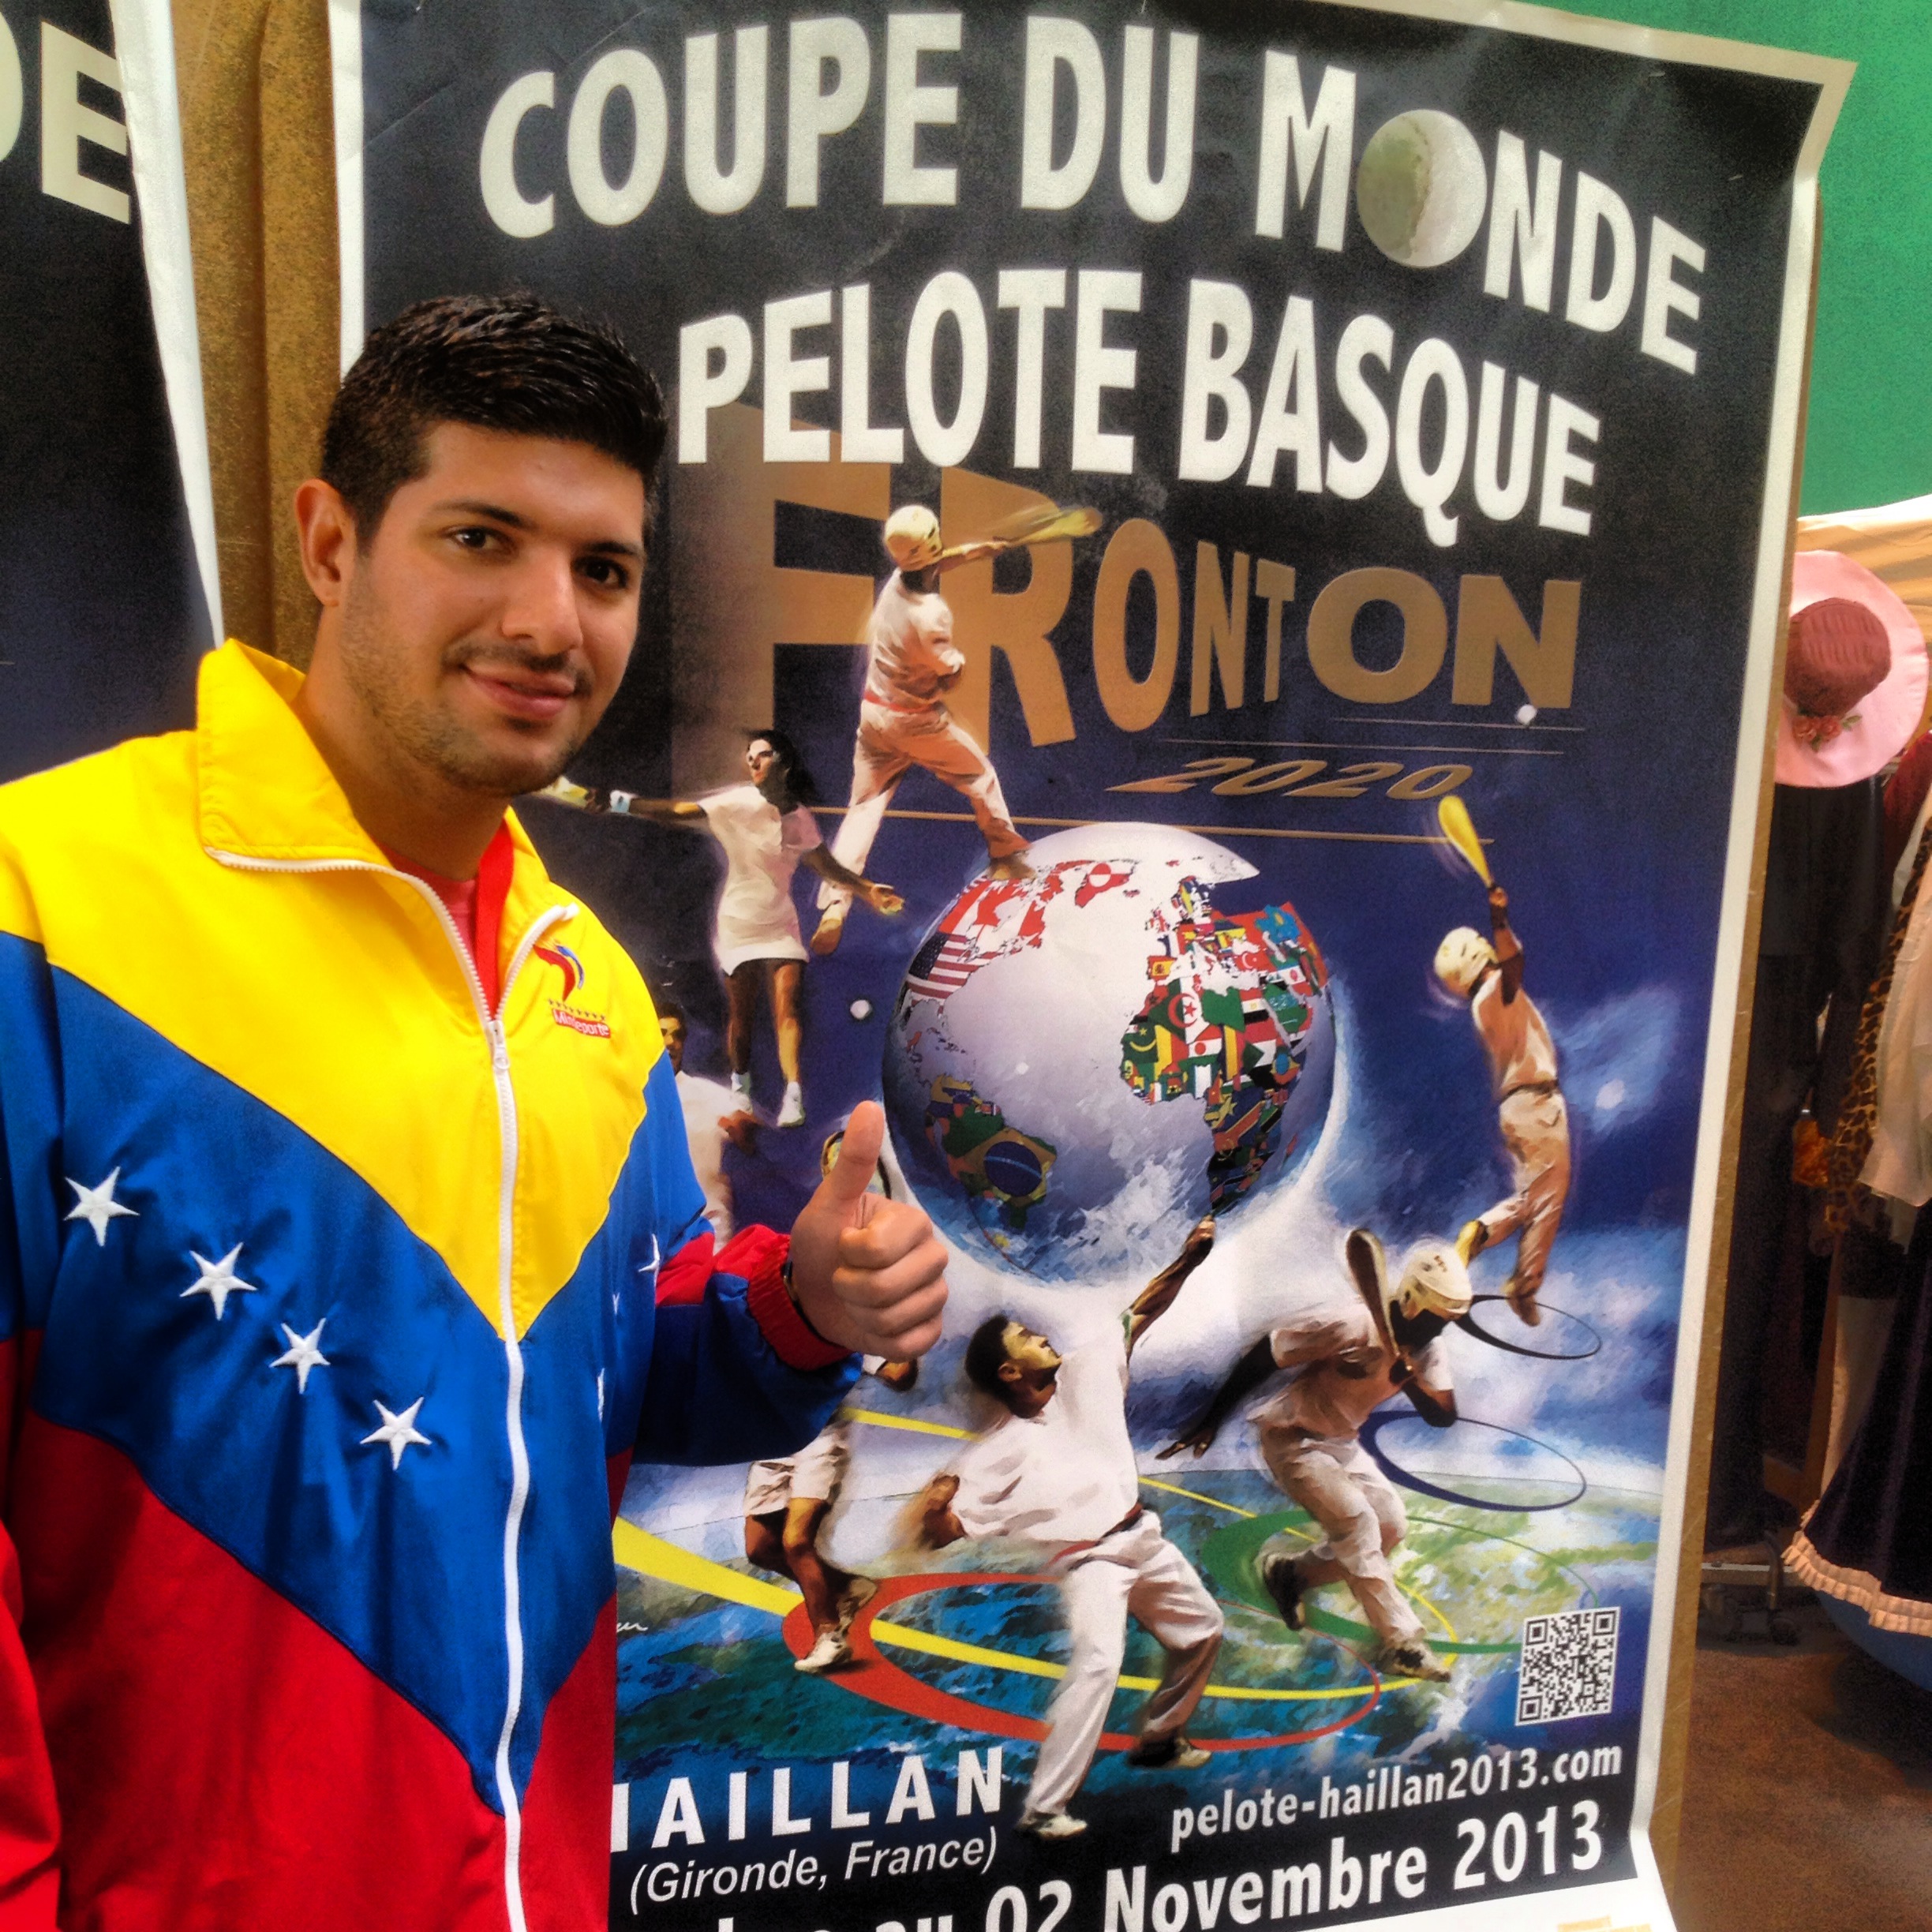 Ex Mister se prepara para el Campeonato mundial de Pelota Vasca 2014